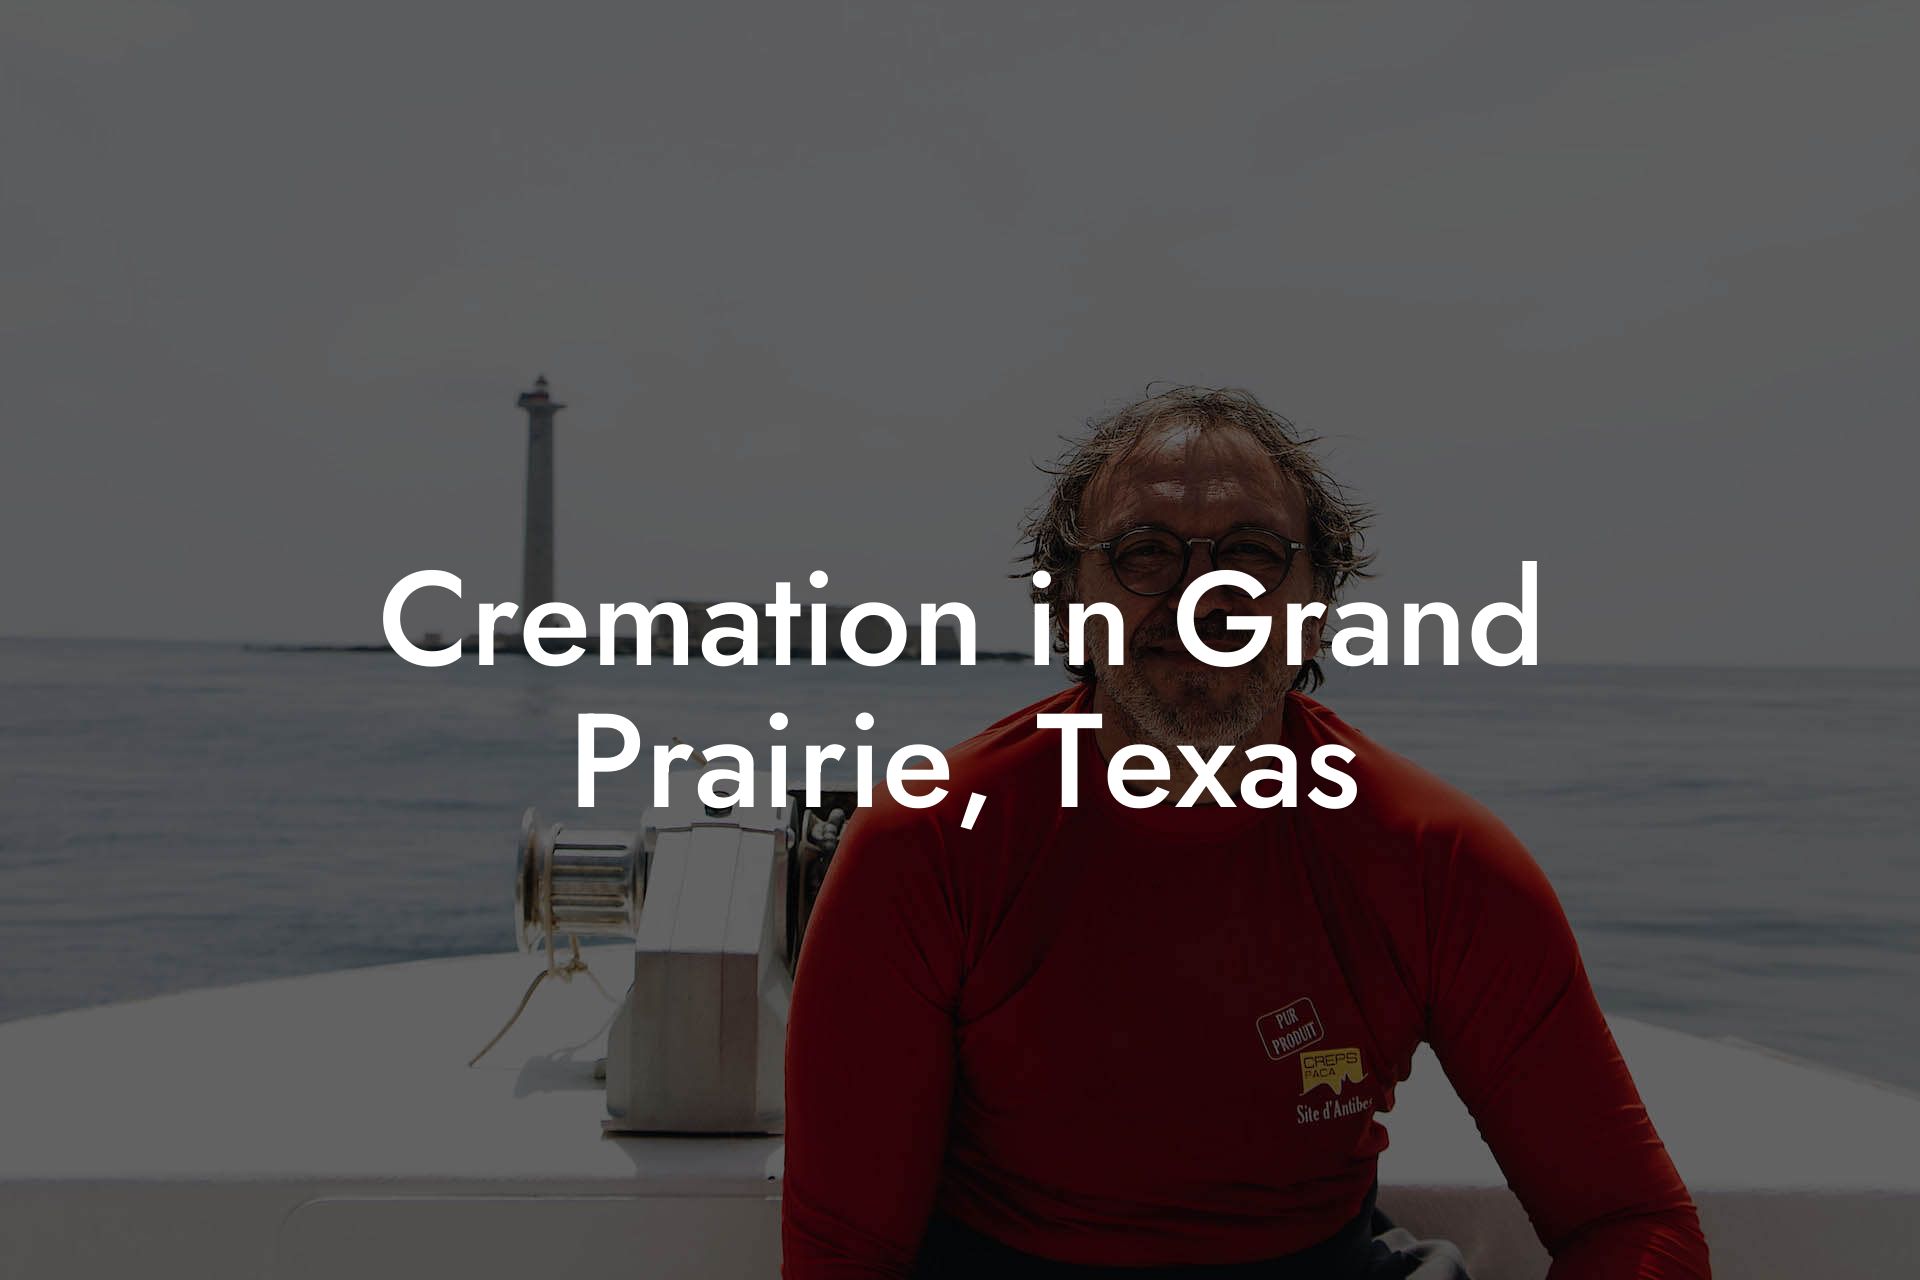 Cremation in Grand Prairie, Texas